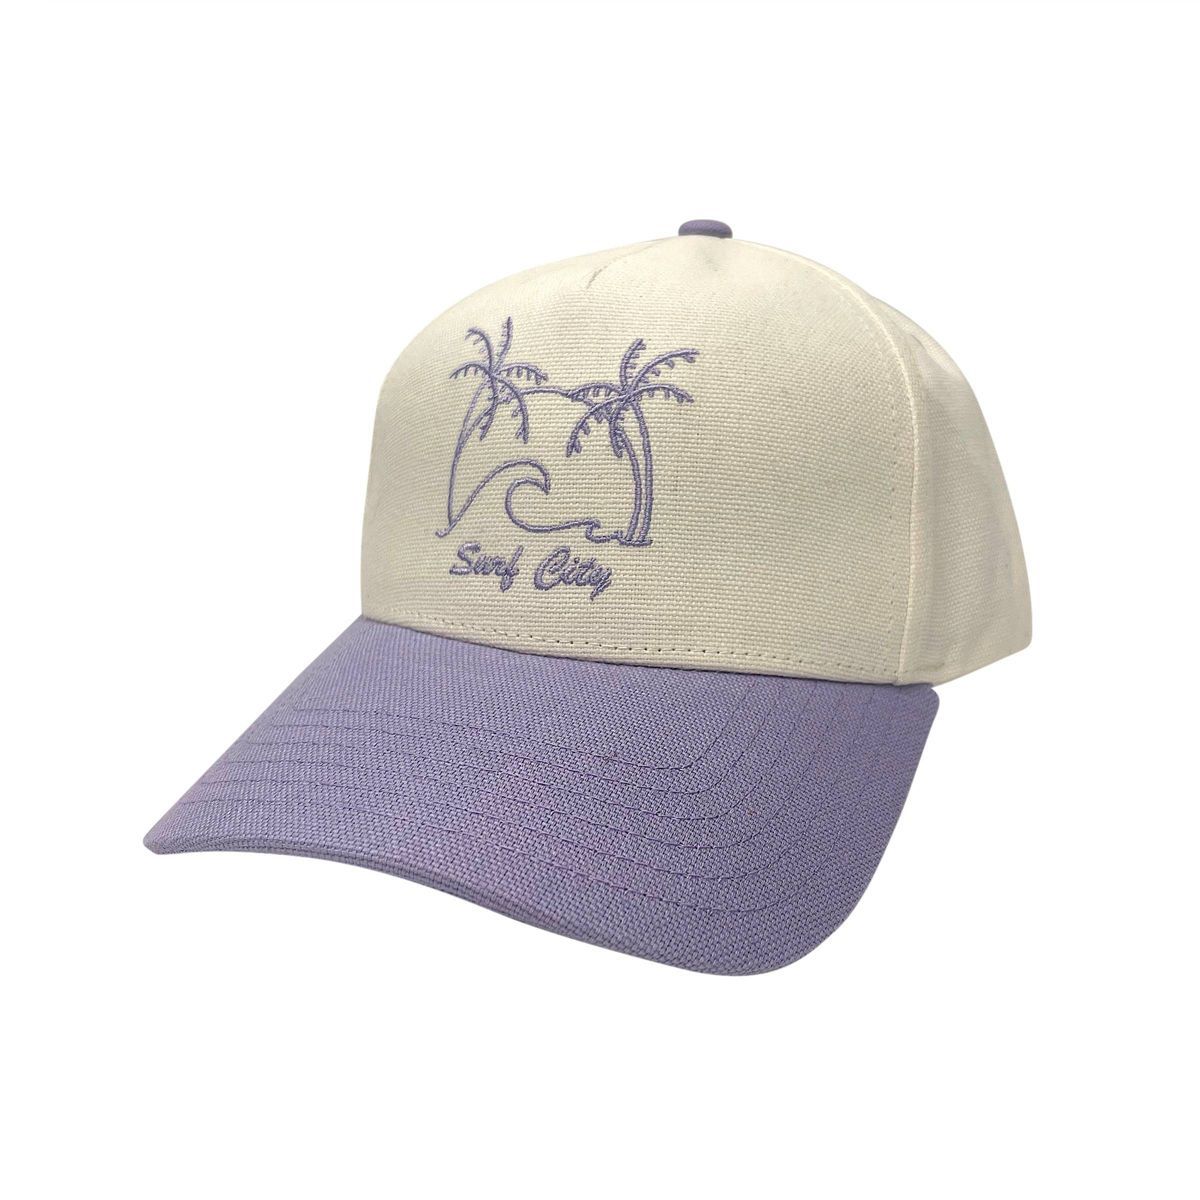 Concept One Surf City Trucker Baseball Hat - Lavender/Cream | Target